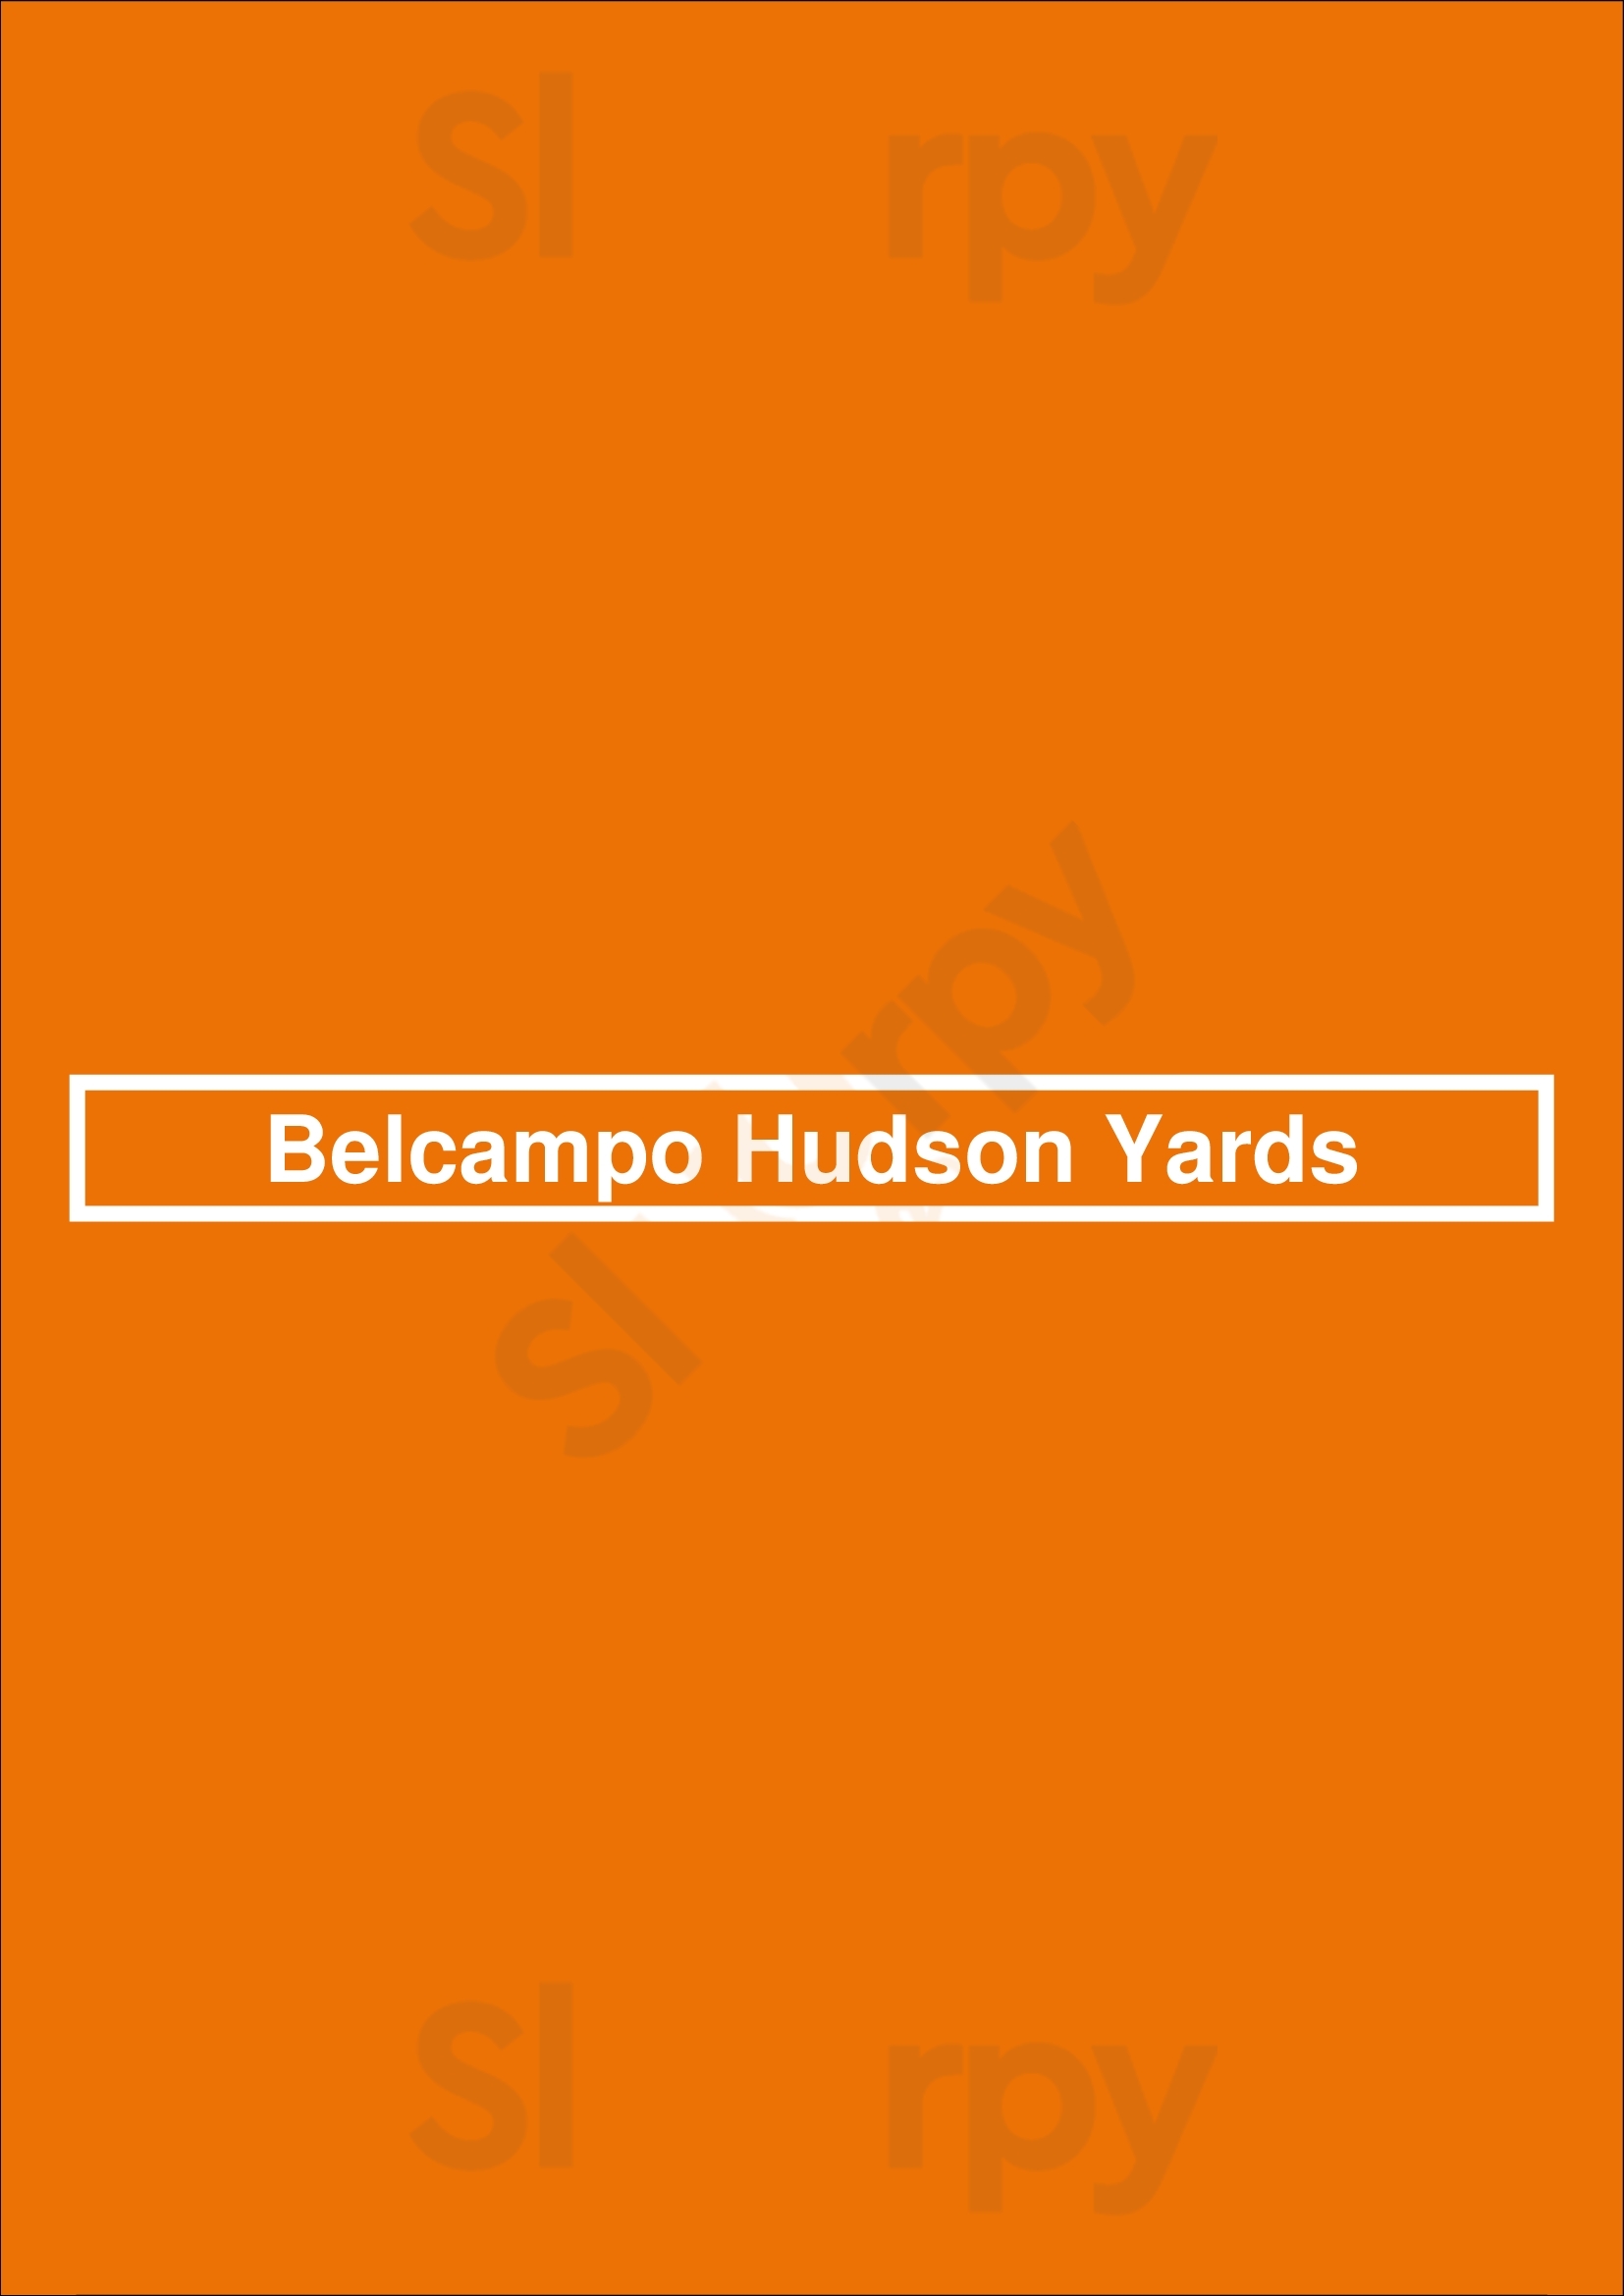 Belcampo Hudson Yards New York City Menu - 1